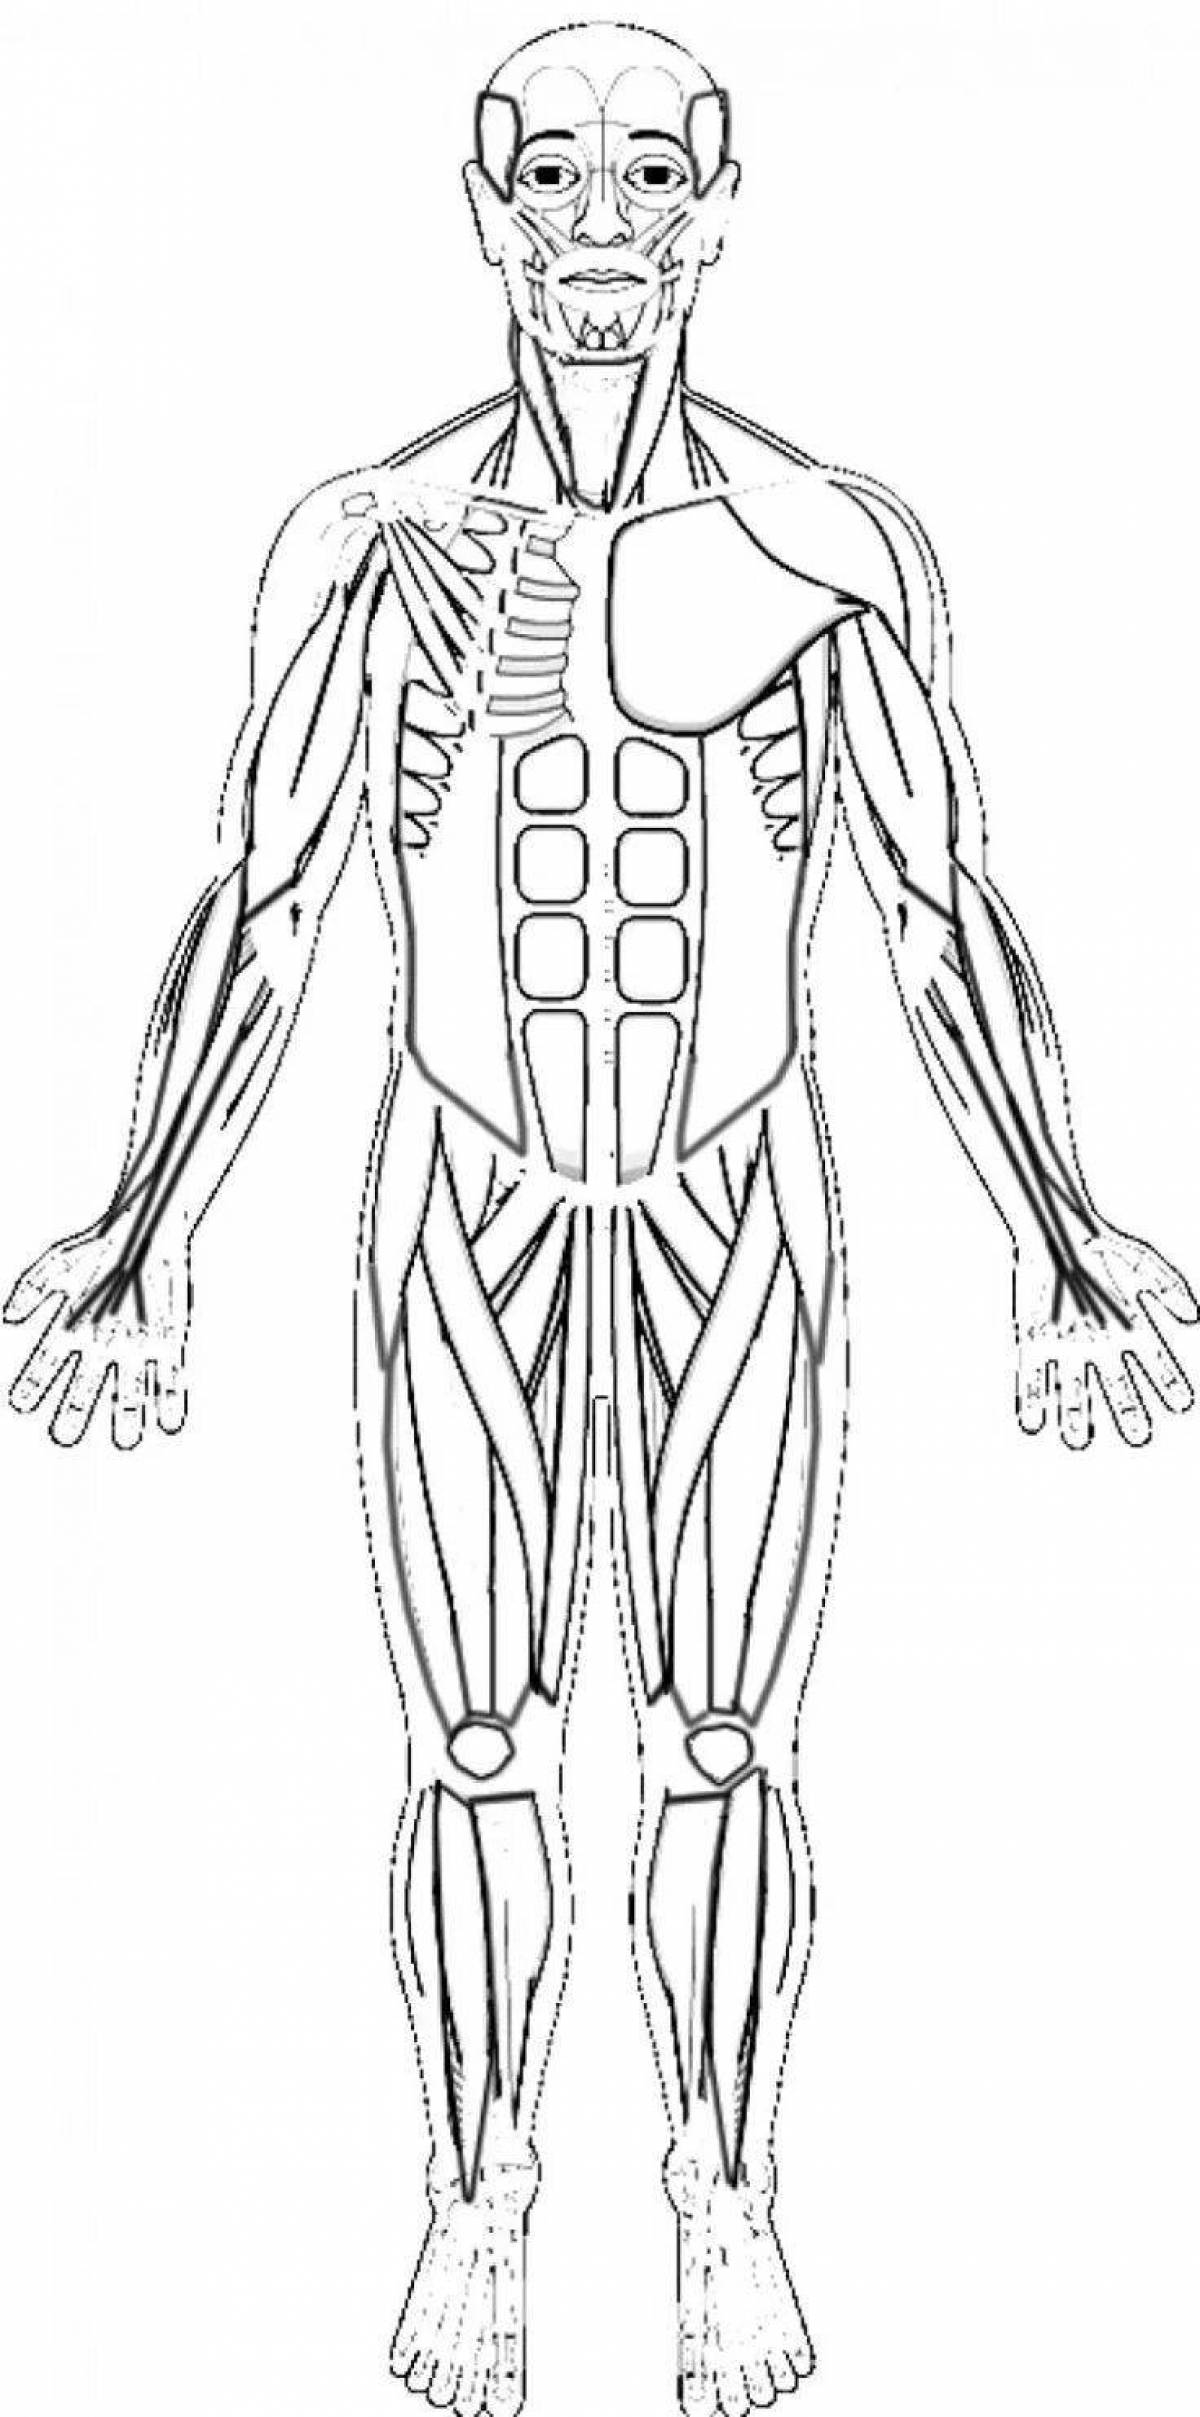 Human anatomy for kids #12